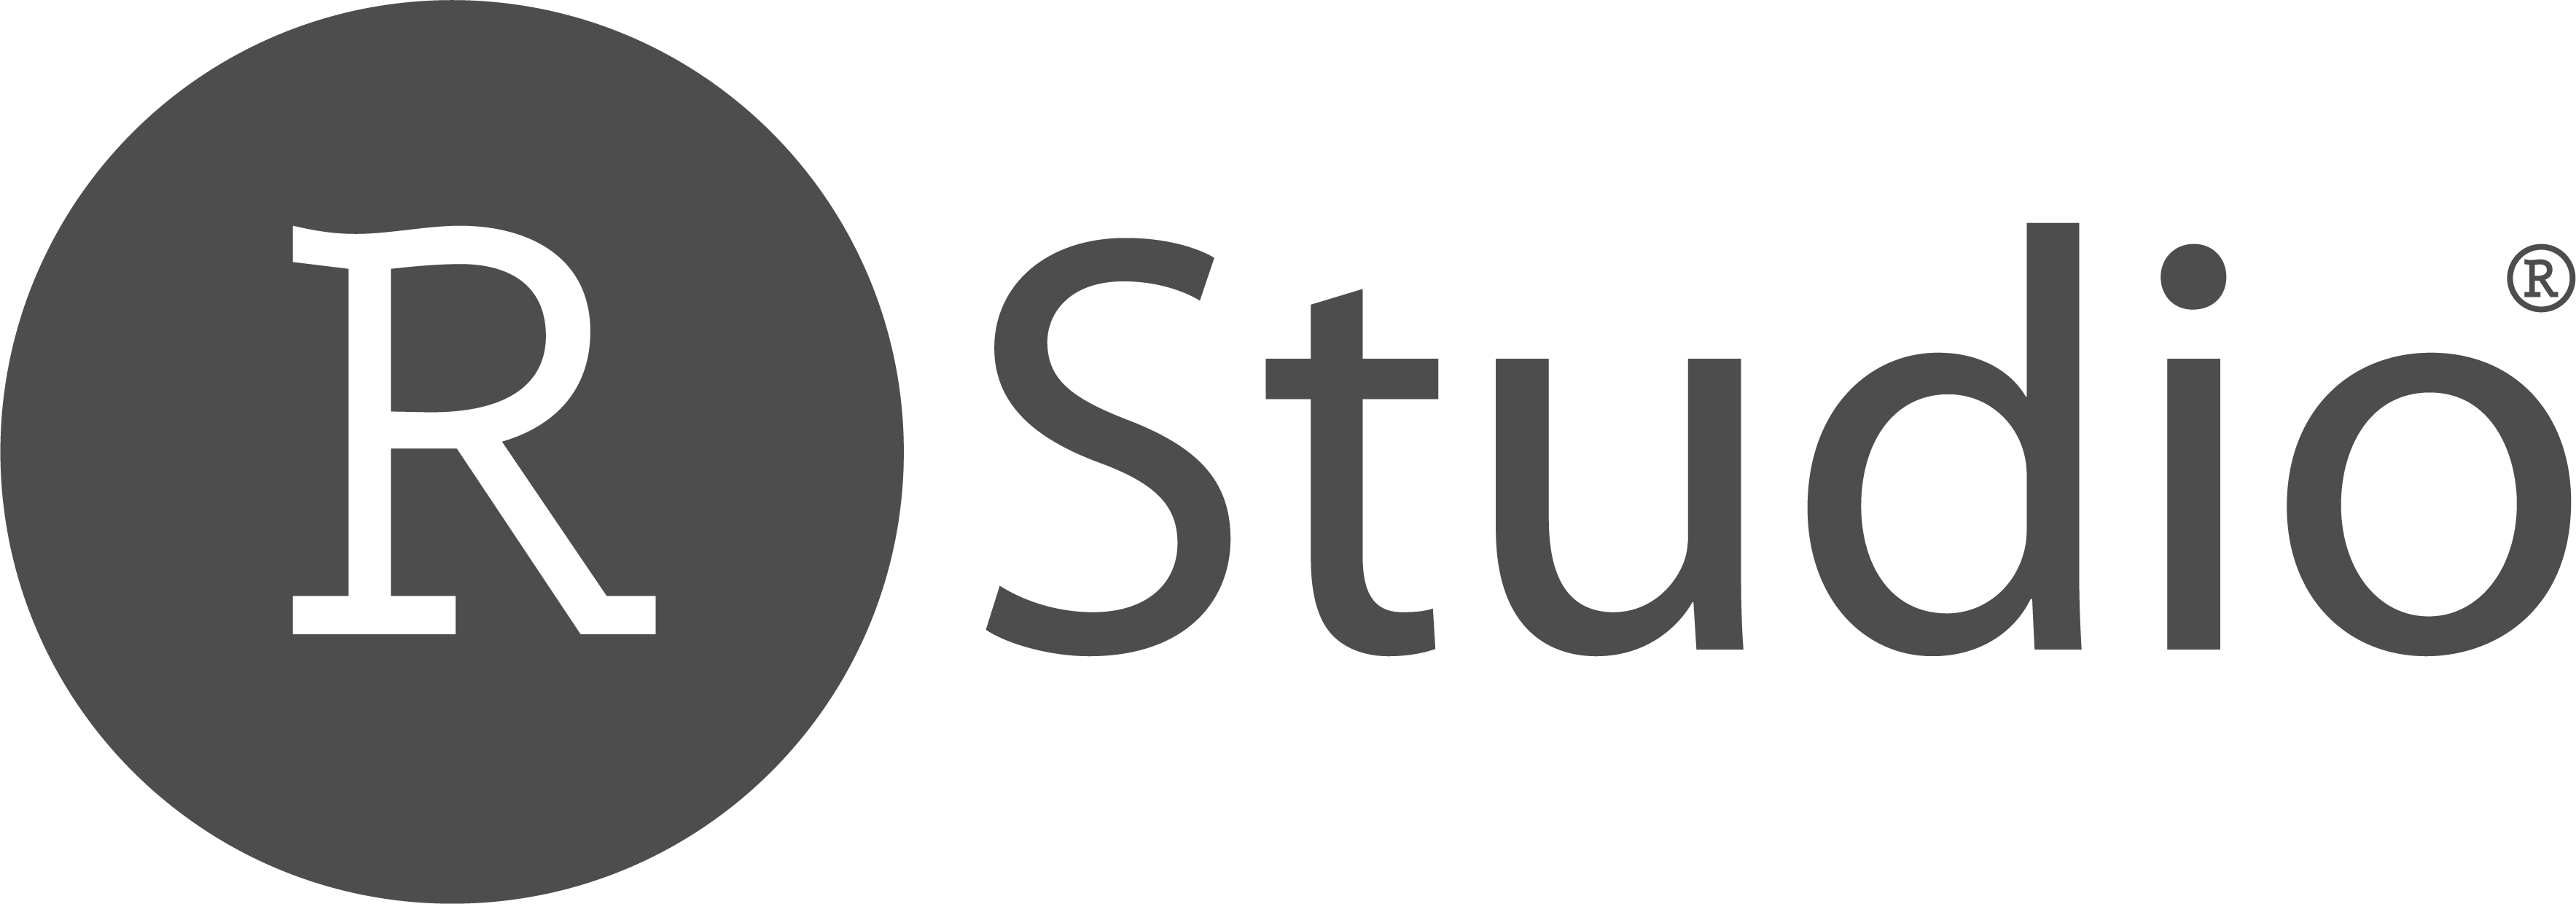 Studio logo png. R студия. RSTUDIO логотип. R-Studio иконка. Трейдмарк r.